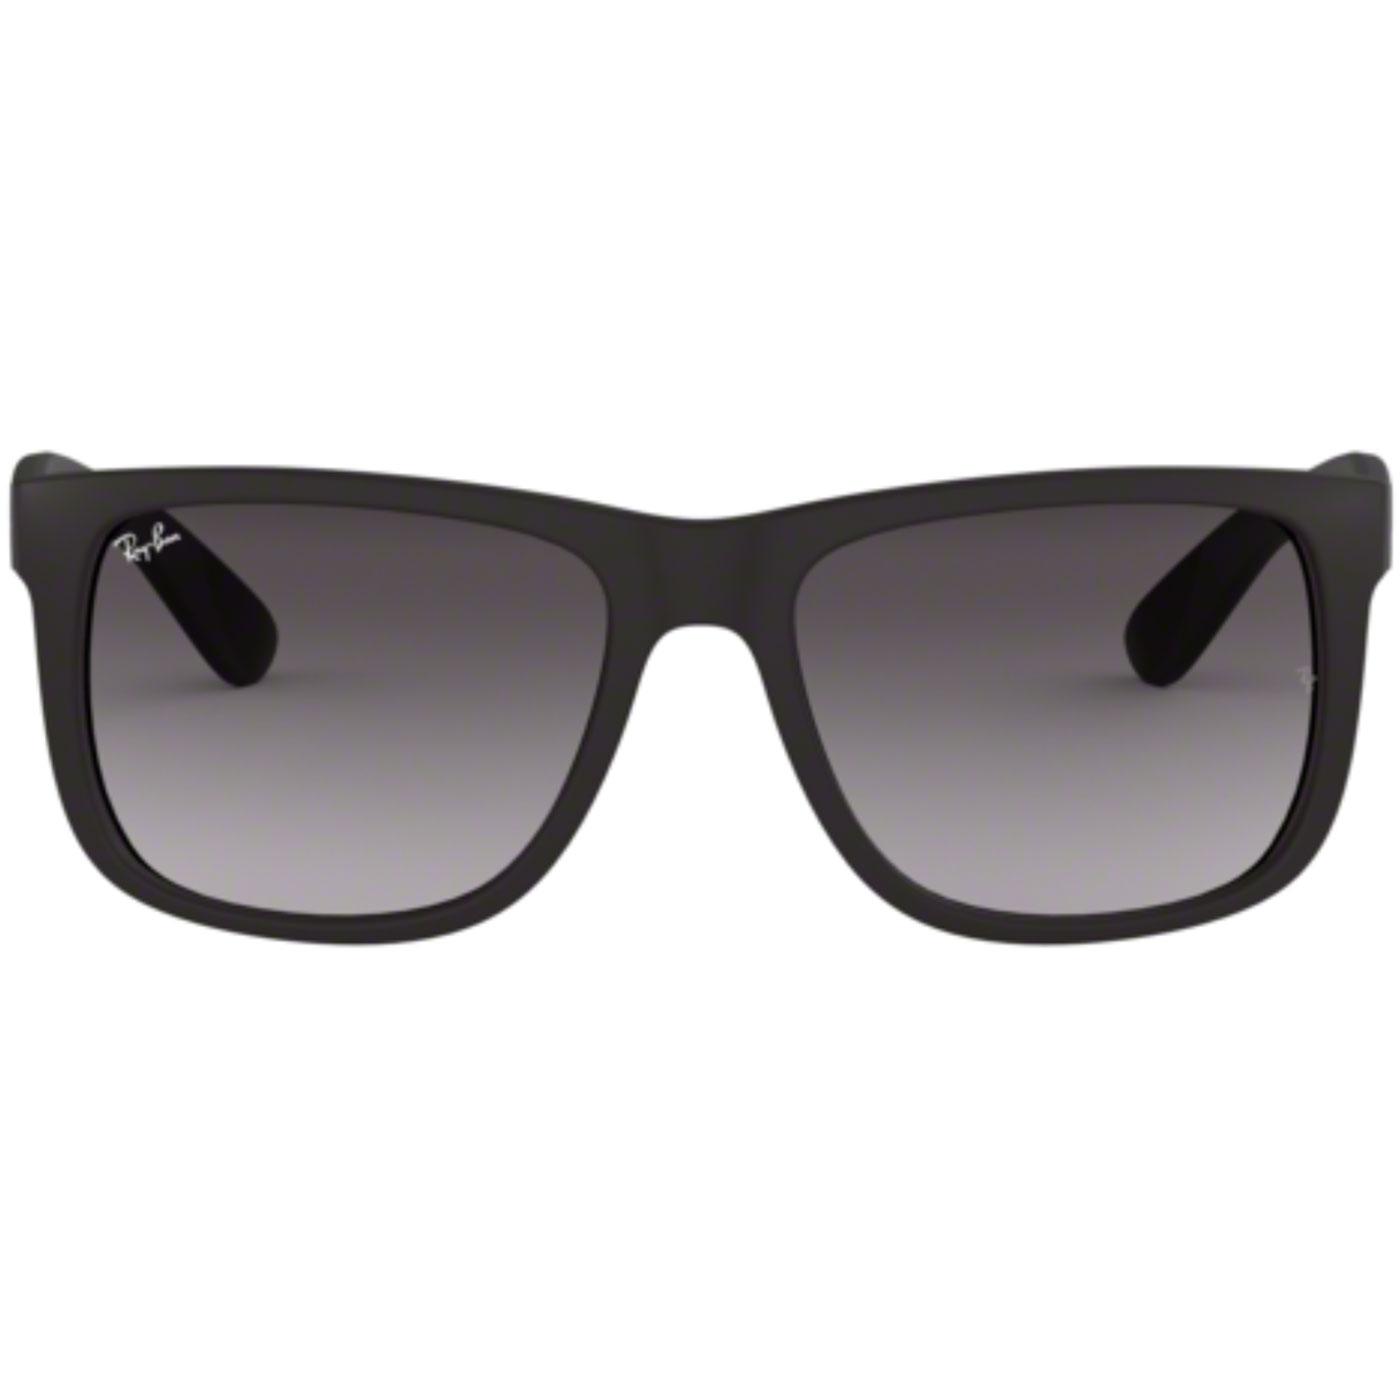 Ray-Ban Justin RB4165 Retro Wayfarer Sunglasses B